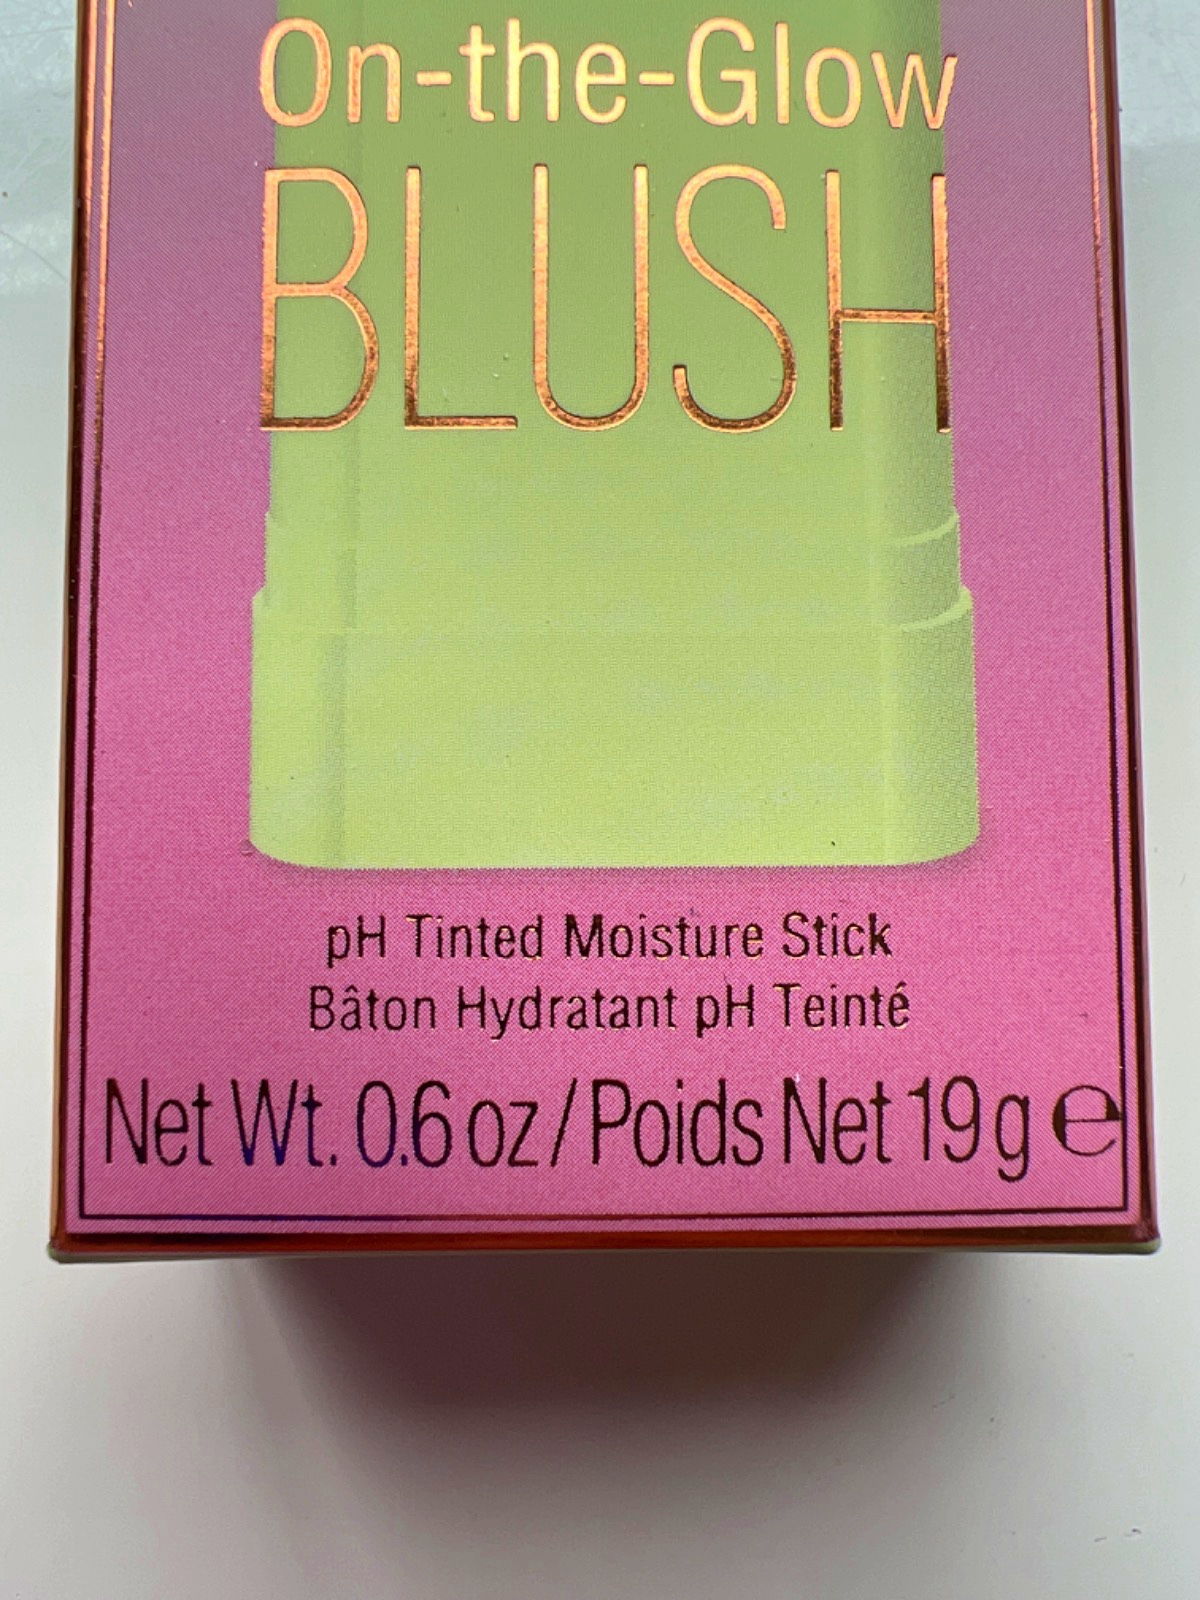 Pixi On-the-Glow Blush CheekTone 19g